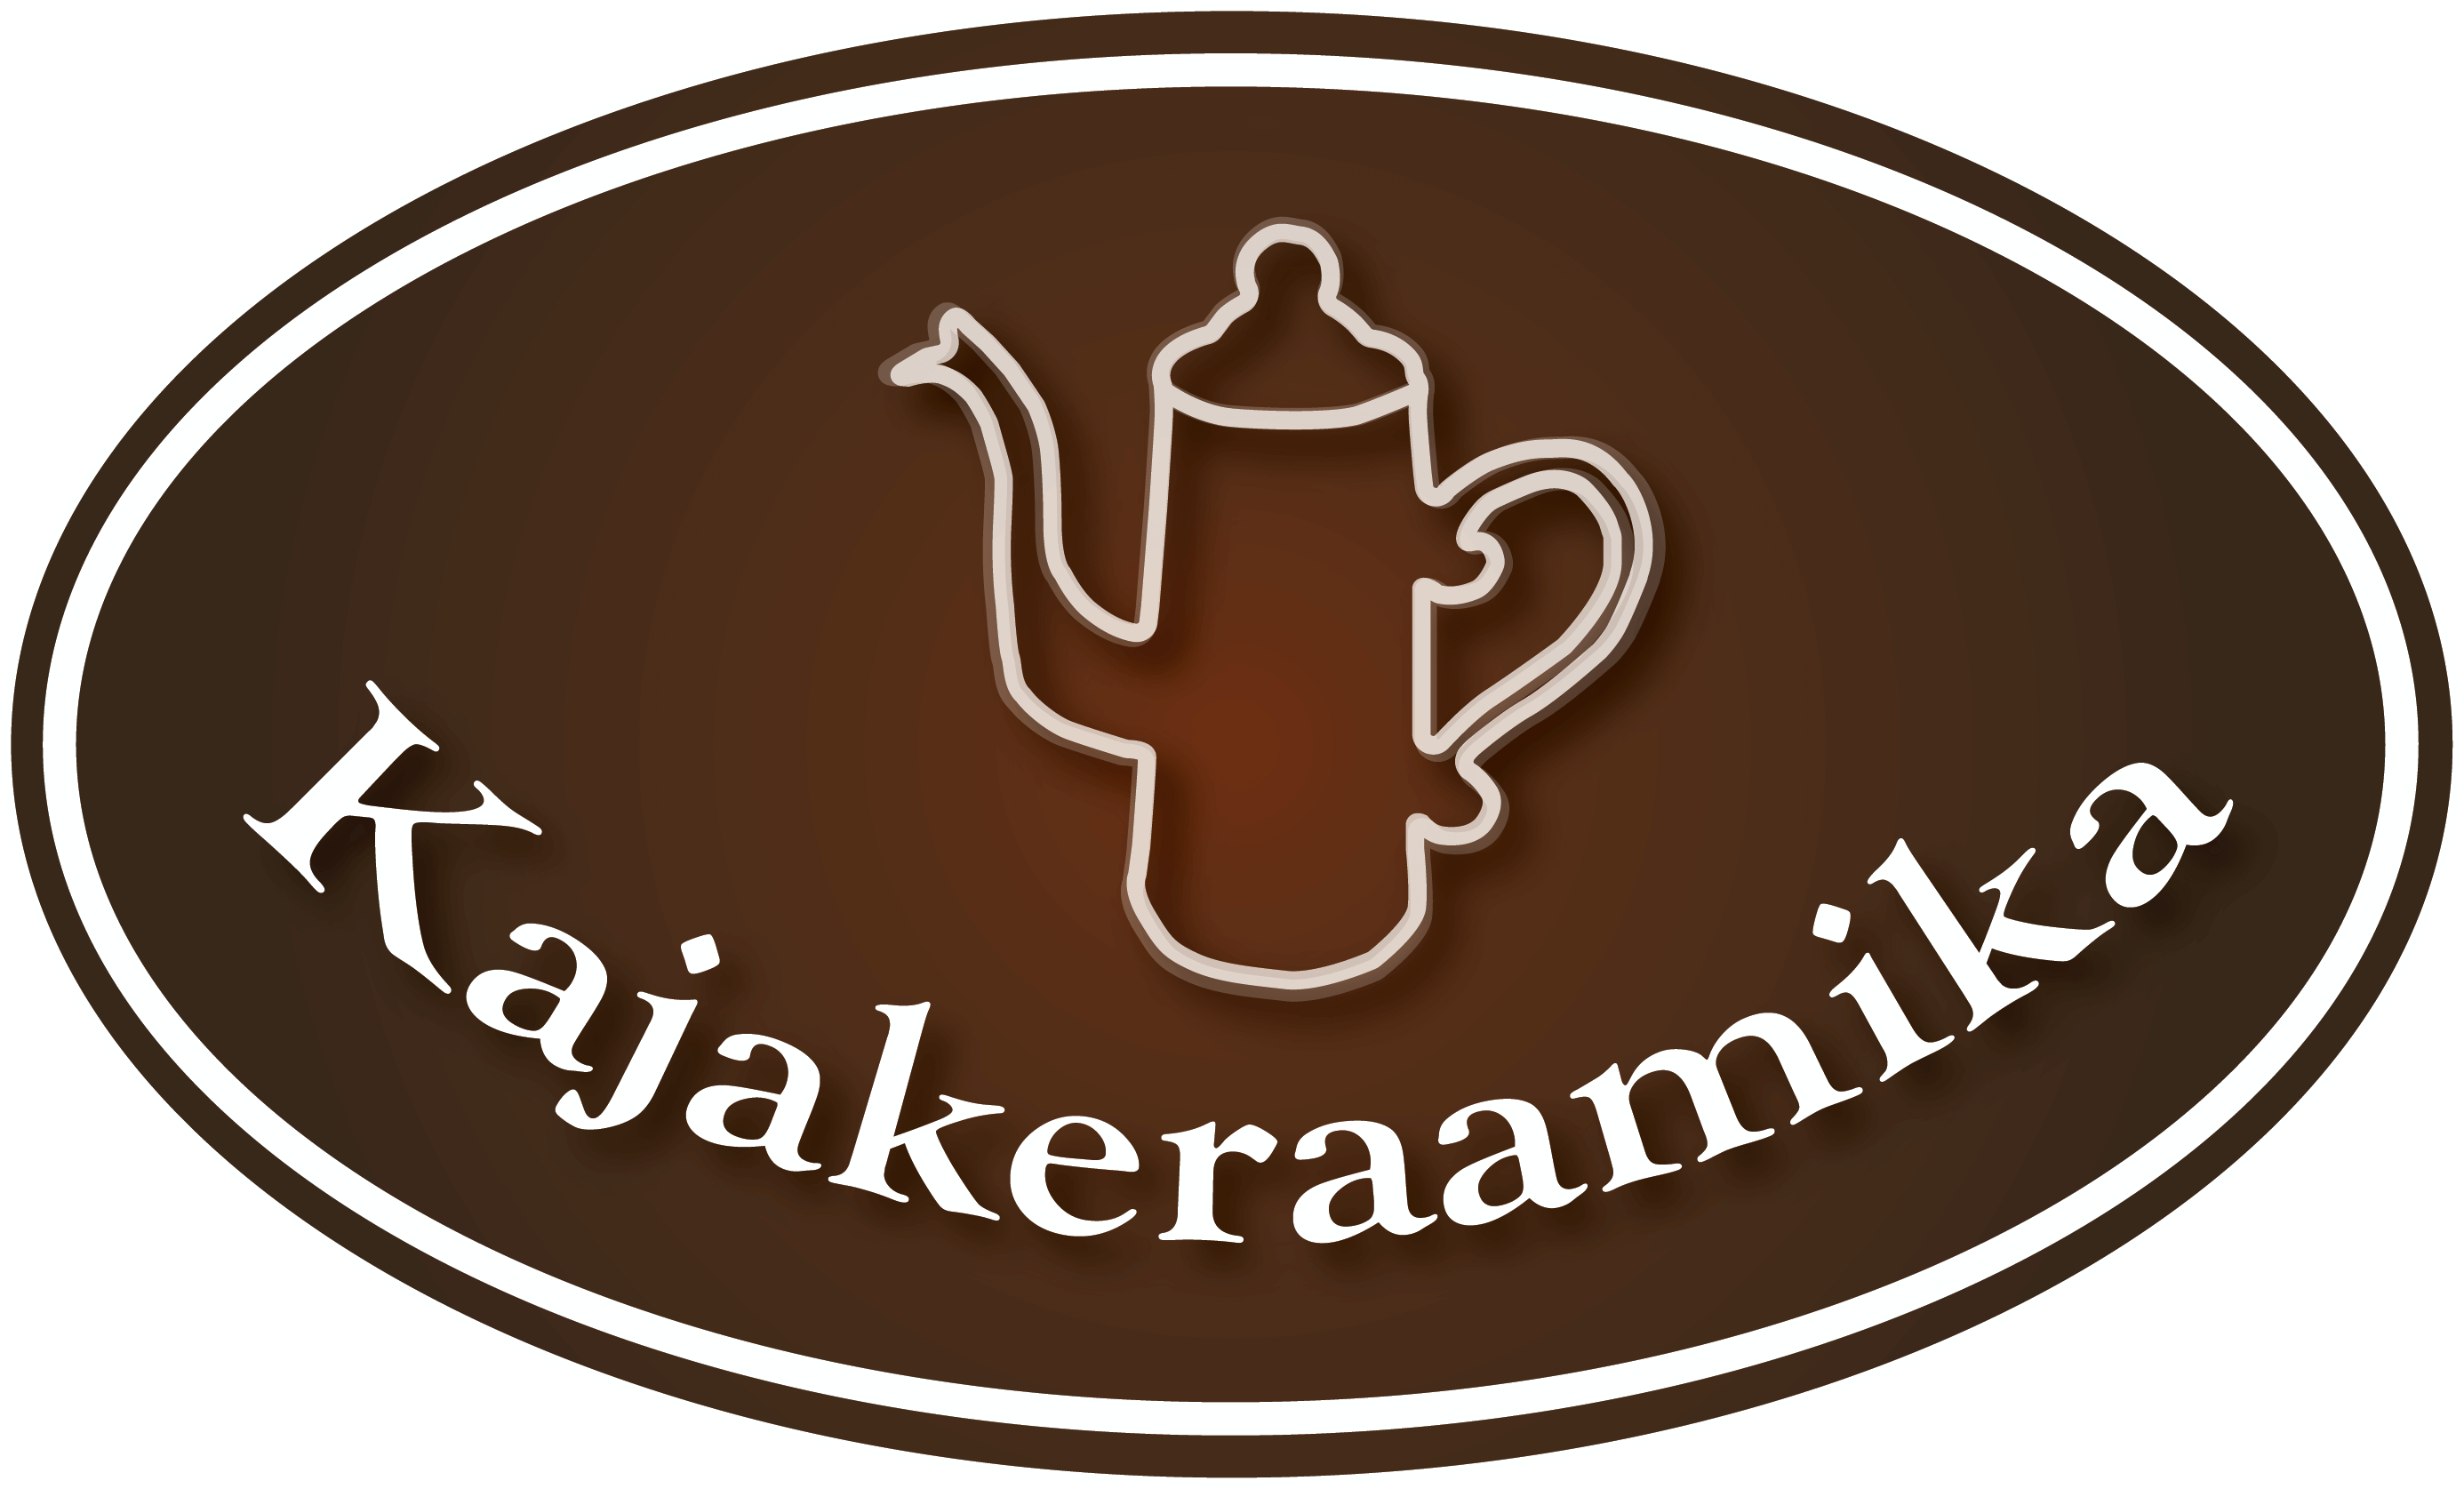 Kajakeraamika logo